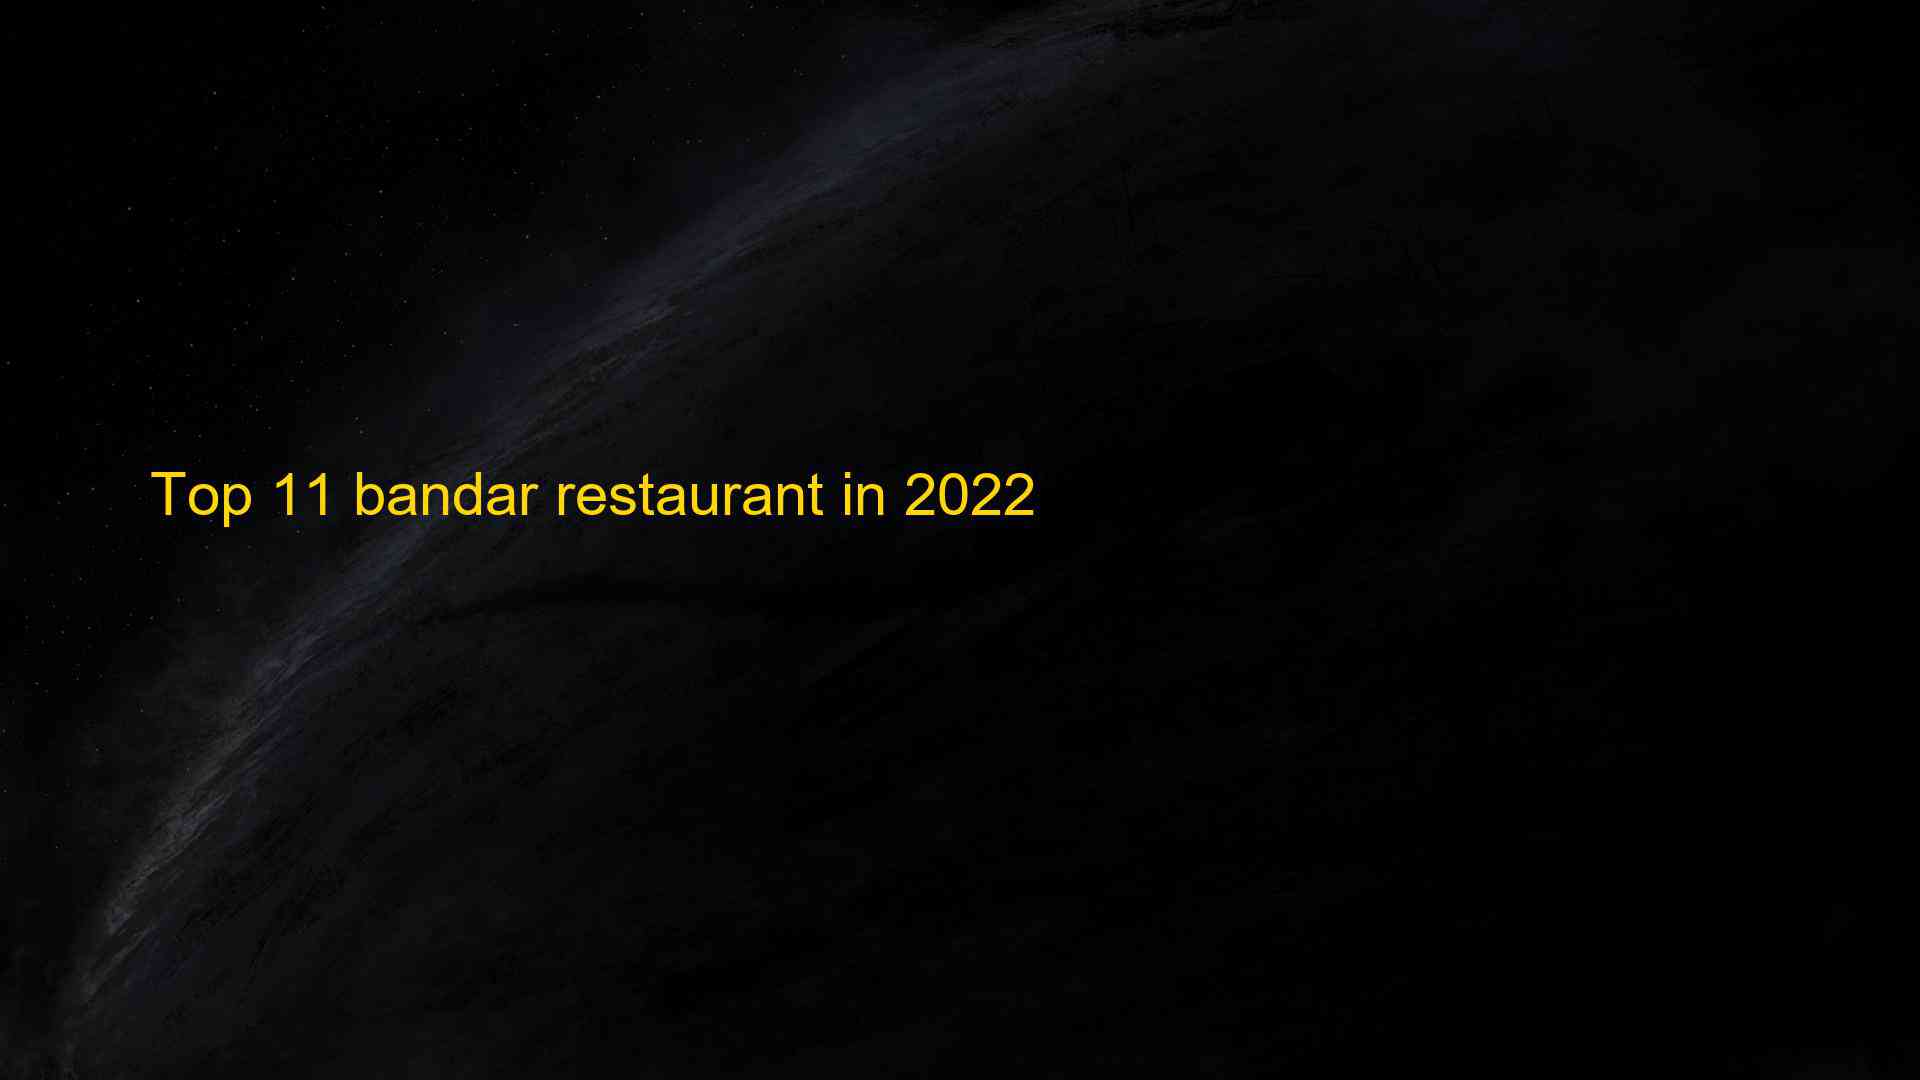 Top 11 bandar restaurant in 2022 1662896689